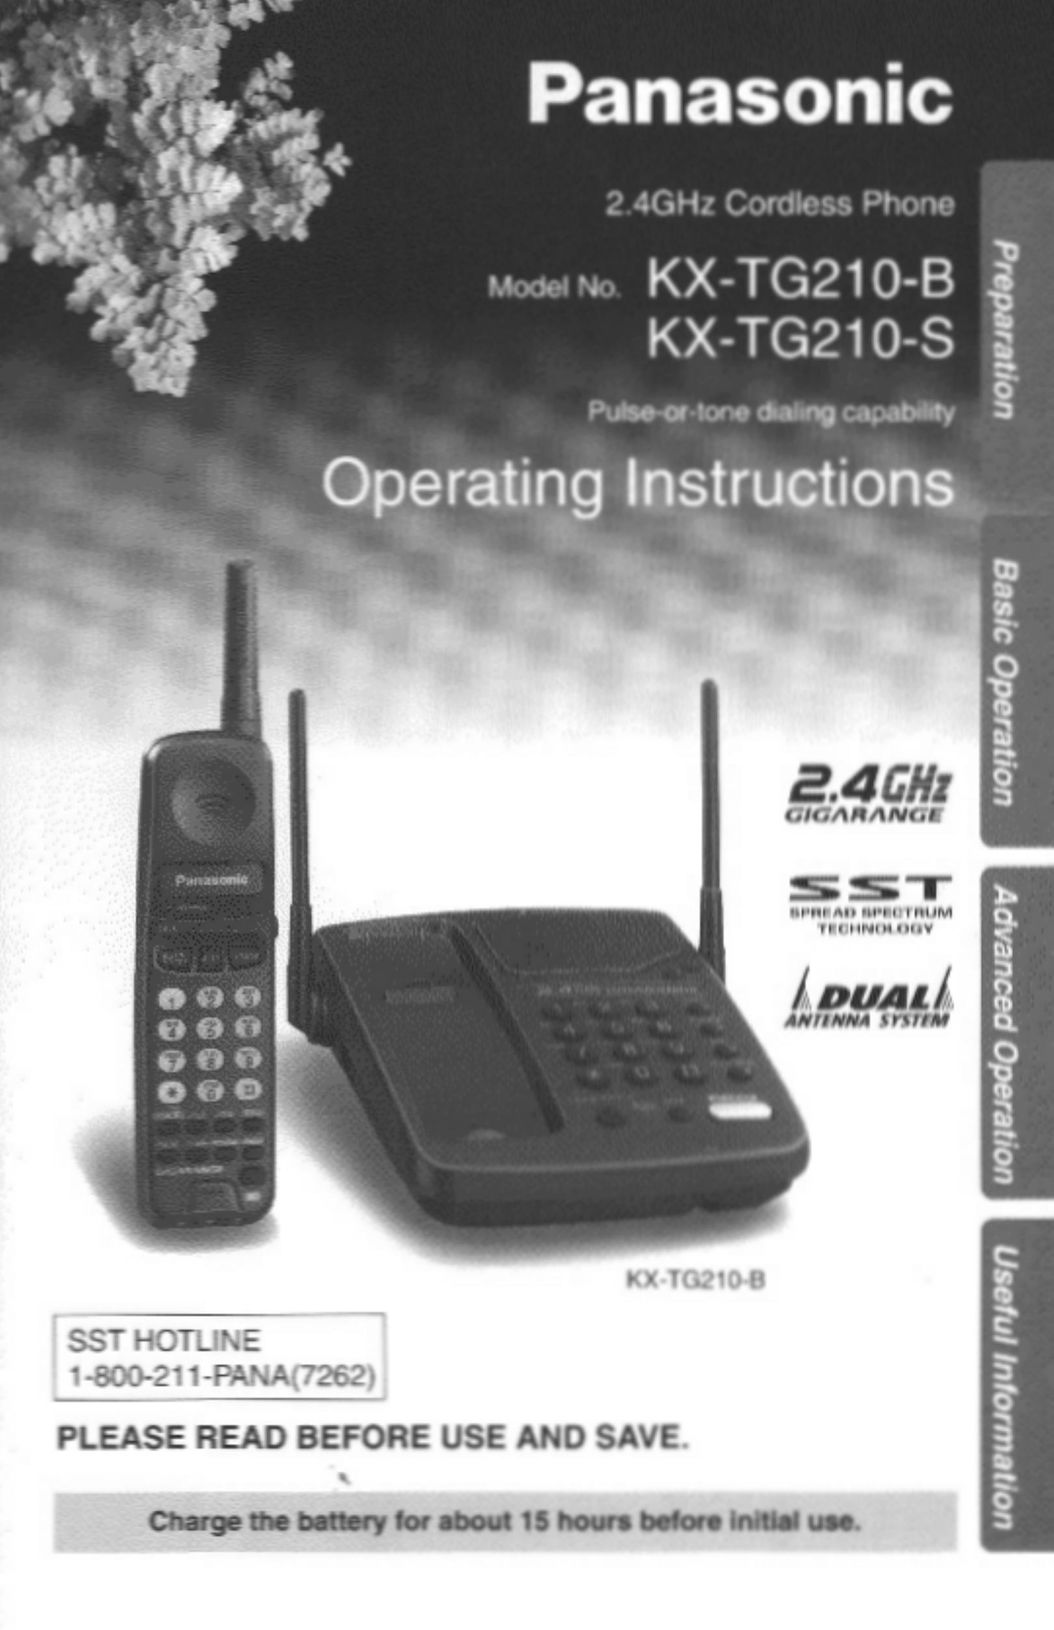 Panasonic KX-TG210-B Cordless Telephone User Manual (Page 1)